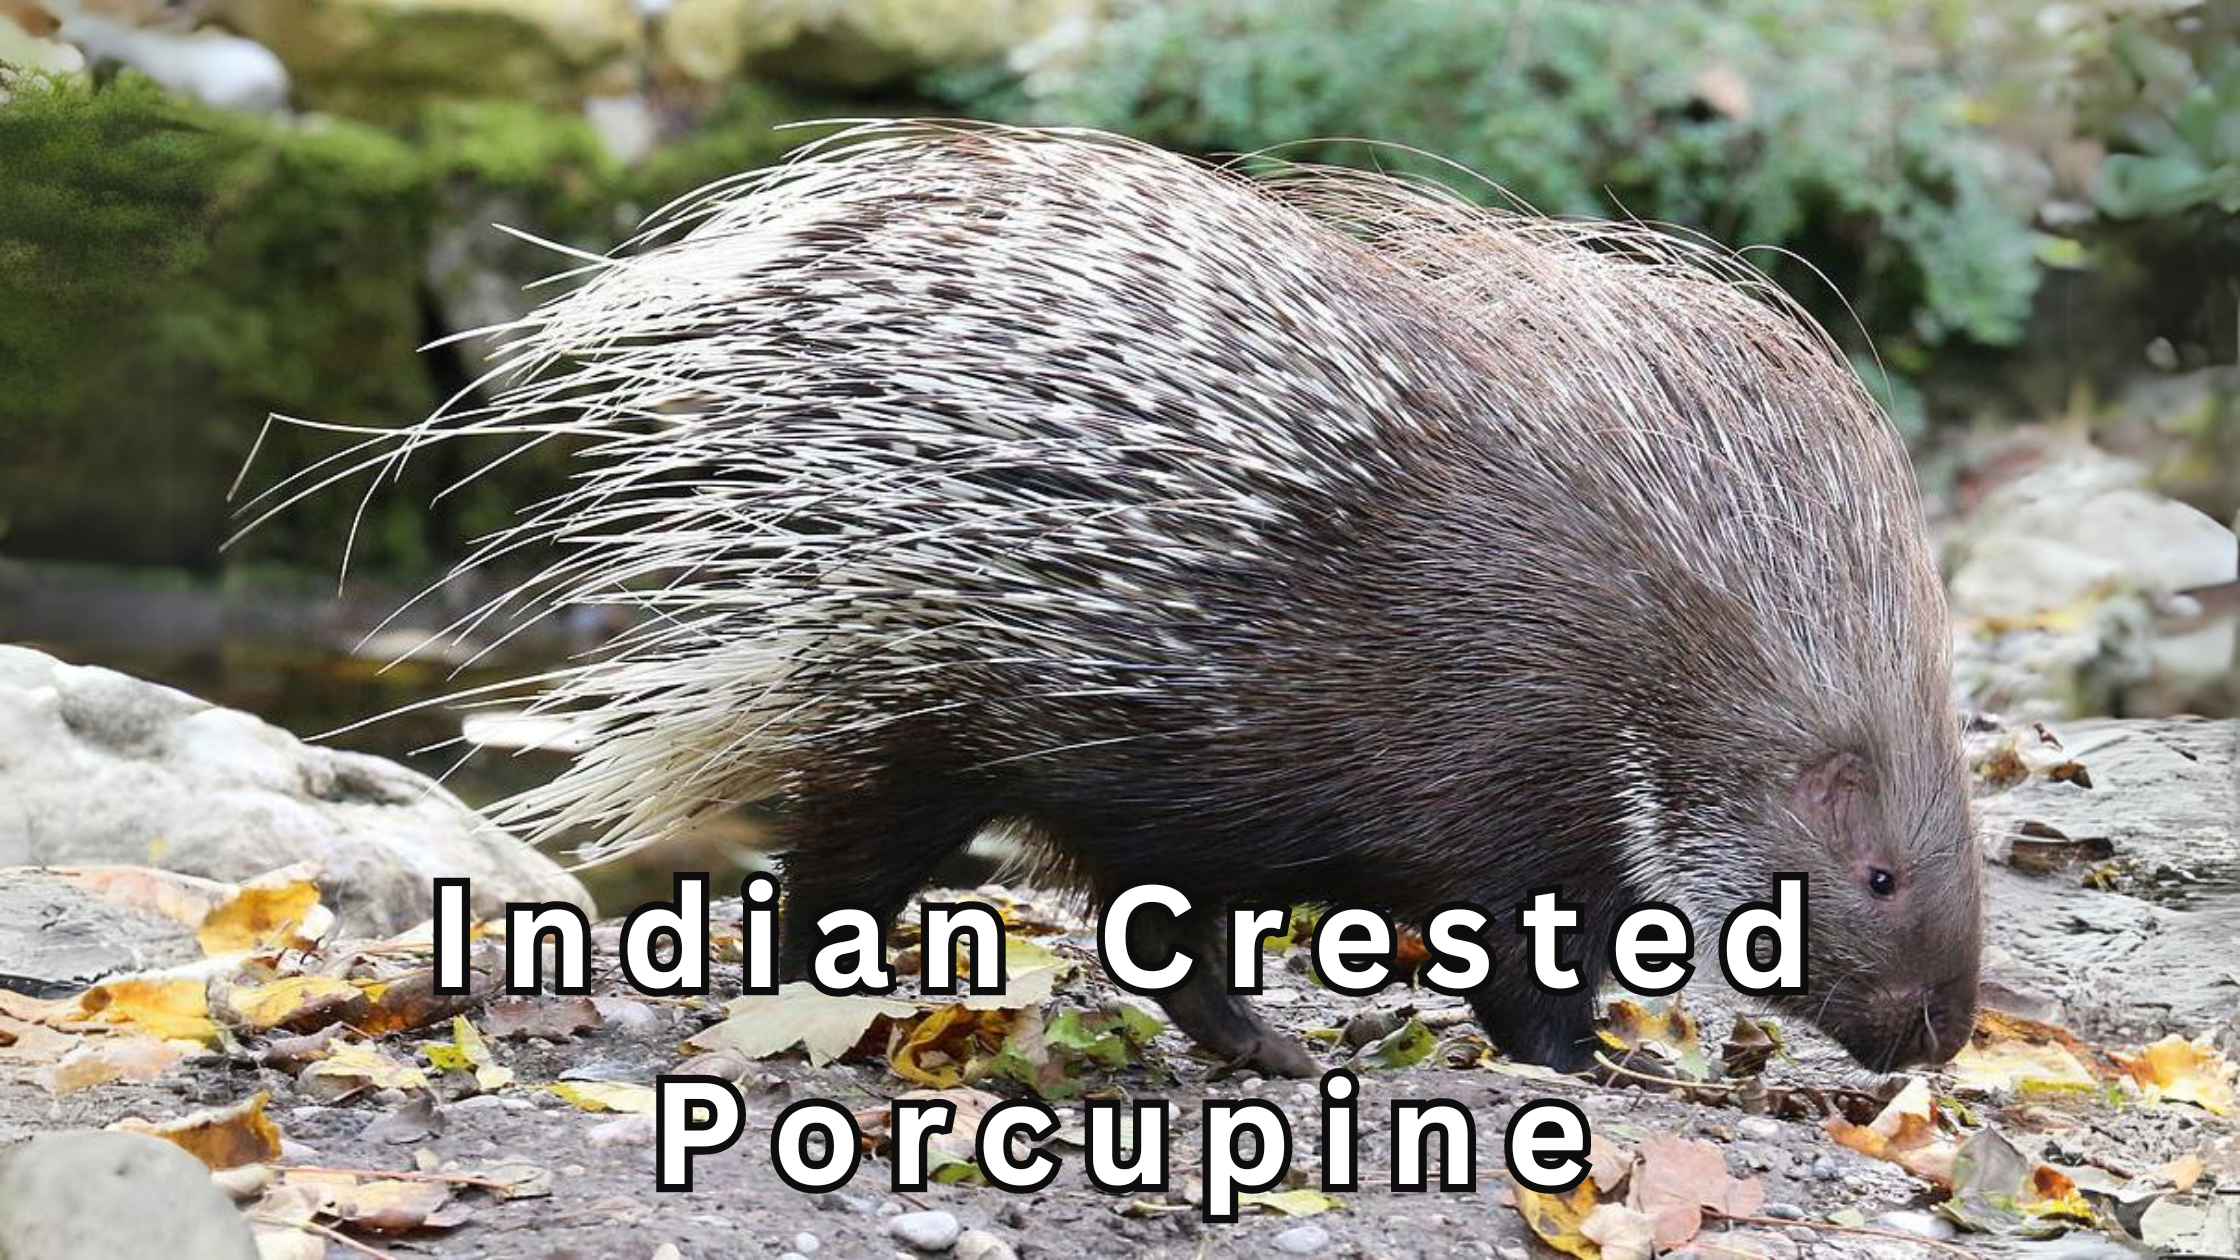 indian crested procupine